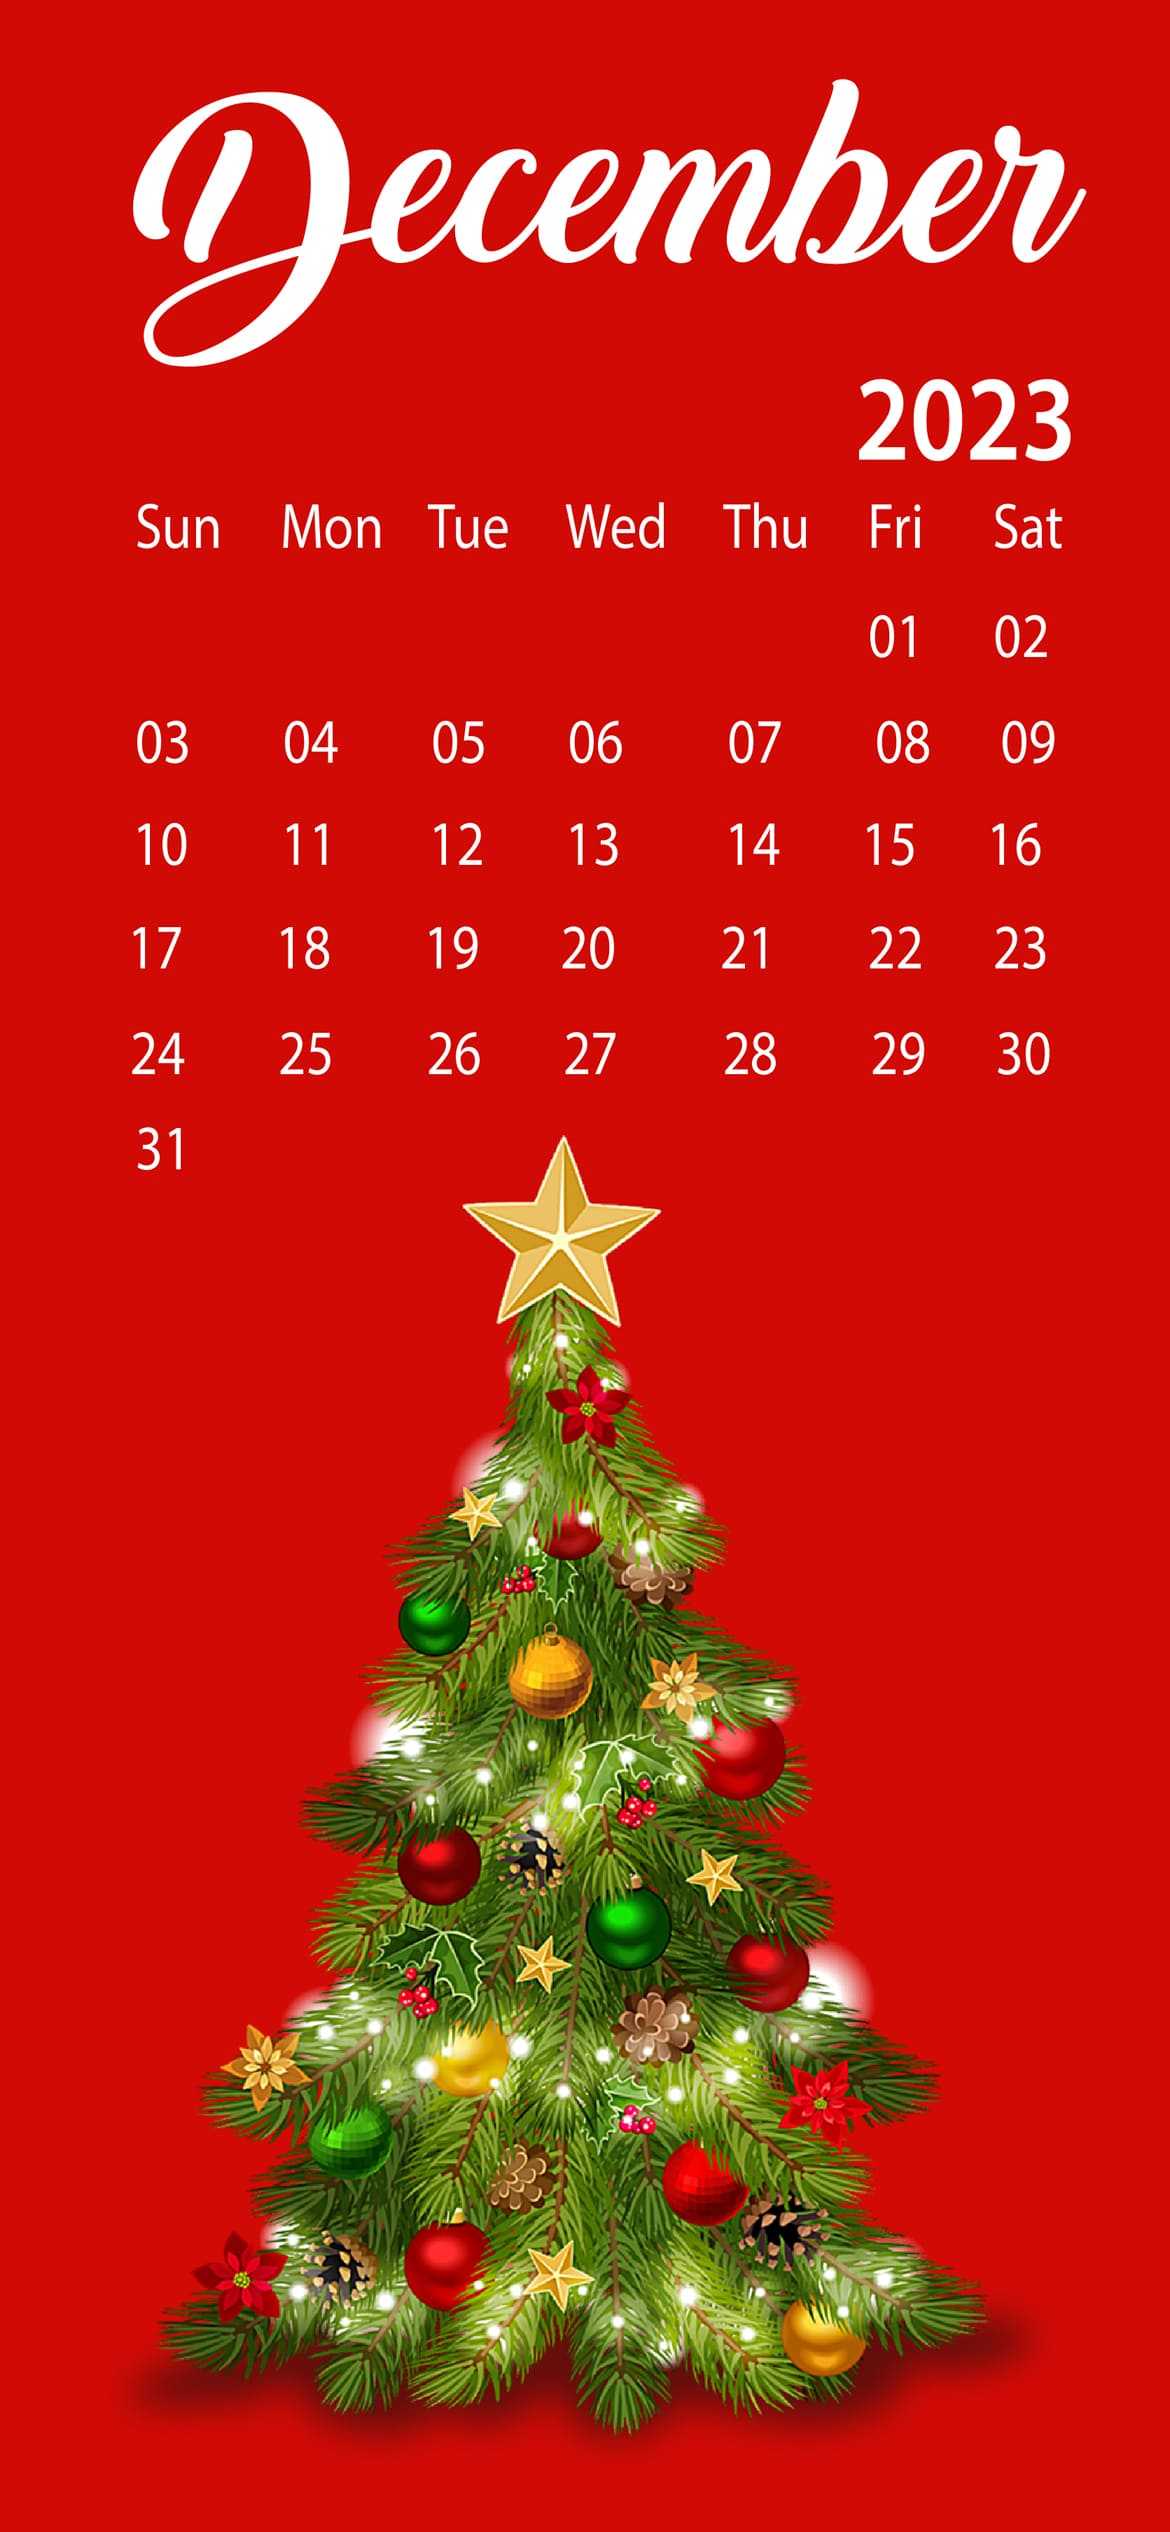 December Calendar Wallpaper 2023 - iXpap